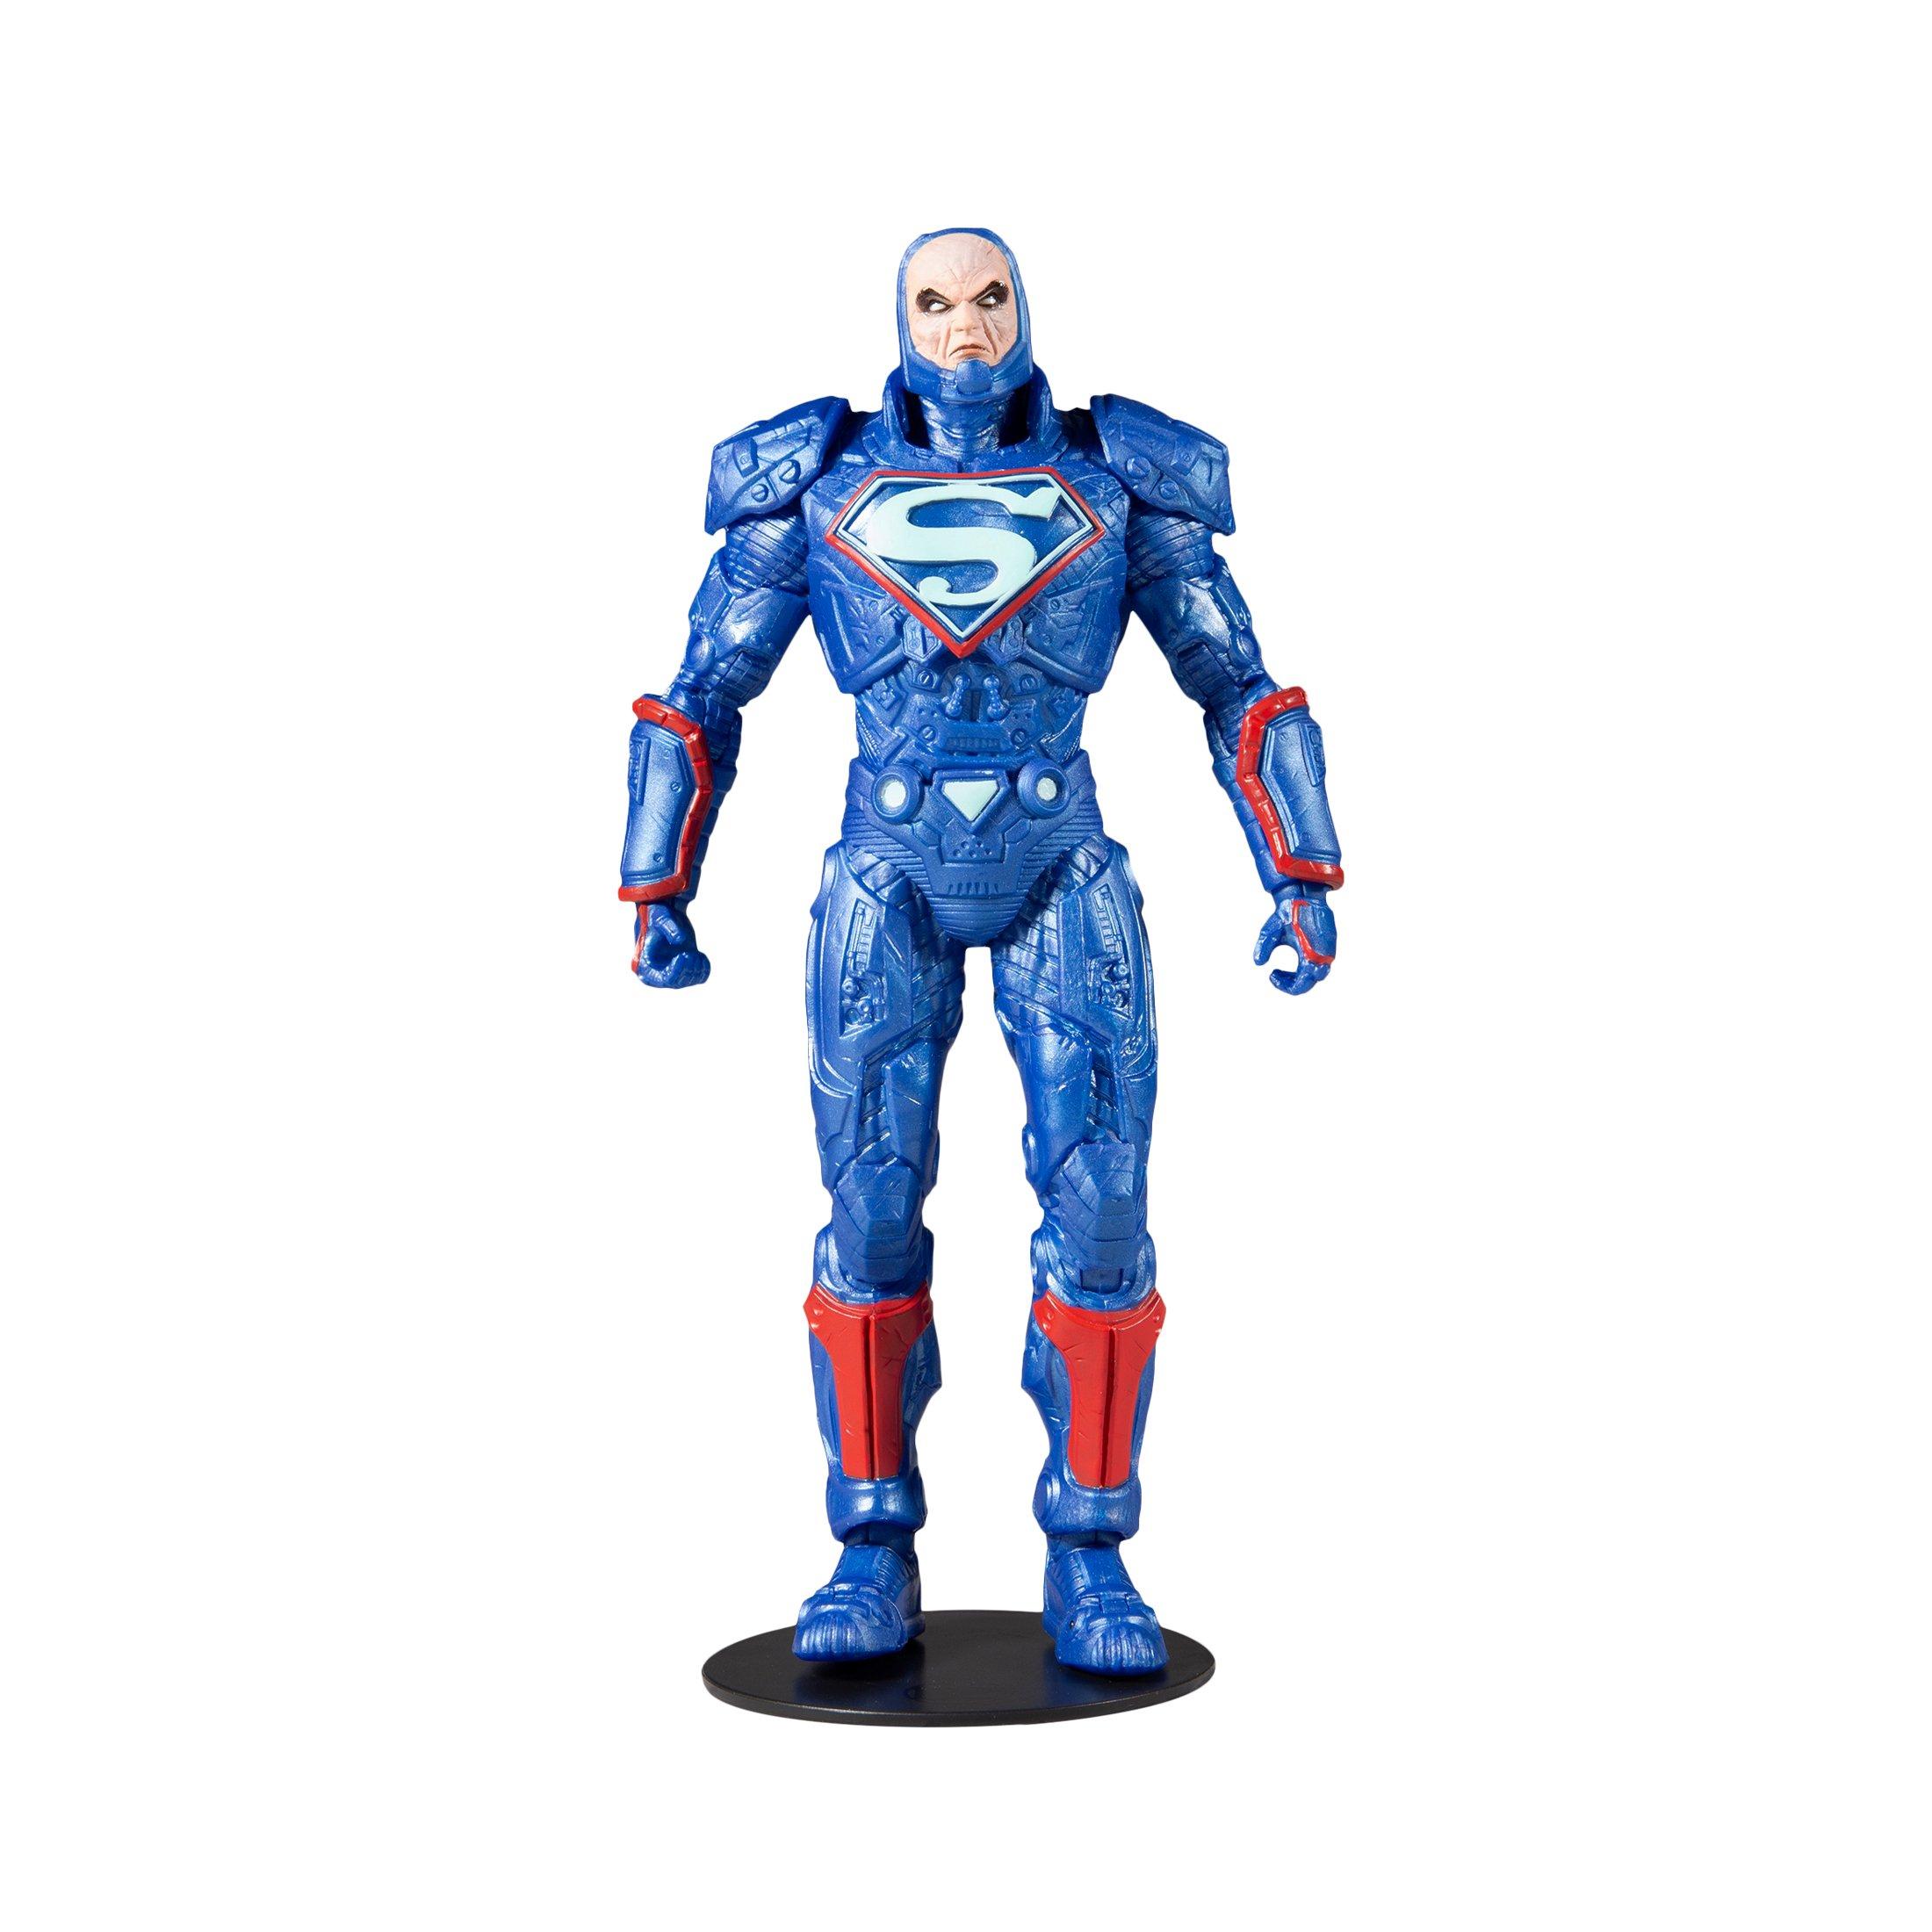 McFarlane Toys Darkseid Action Figure for sale online 